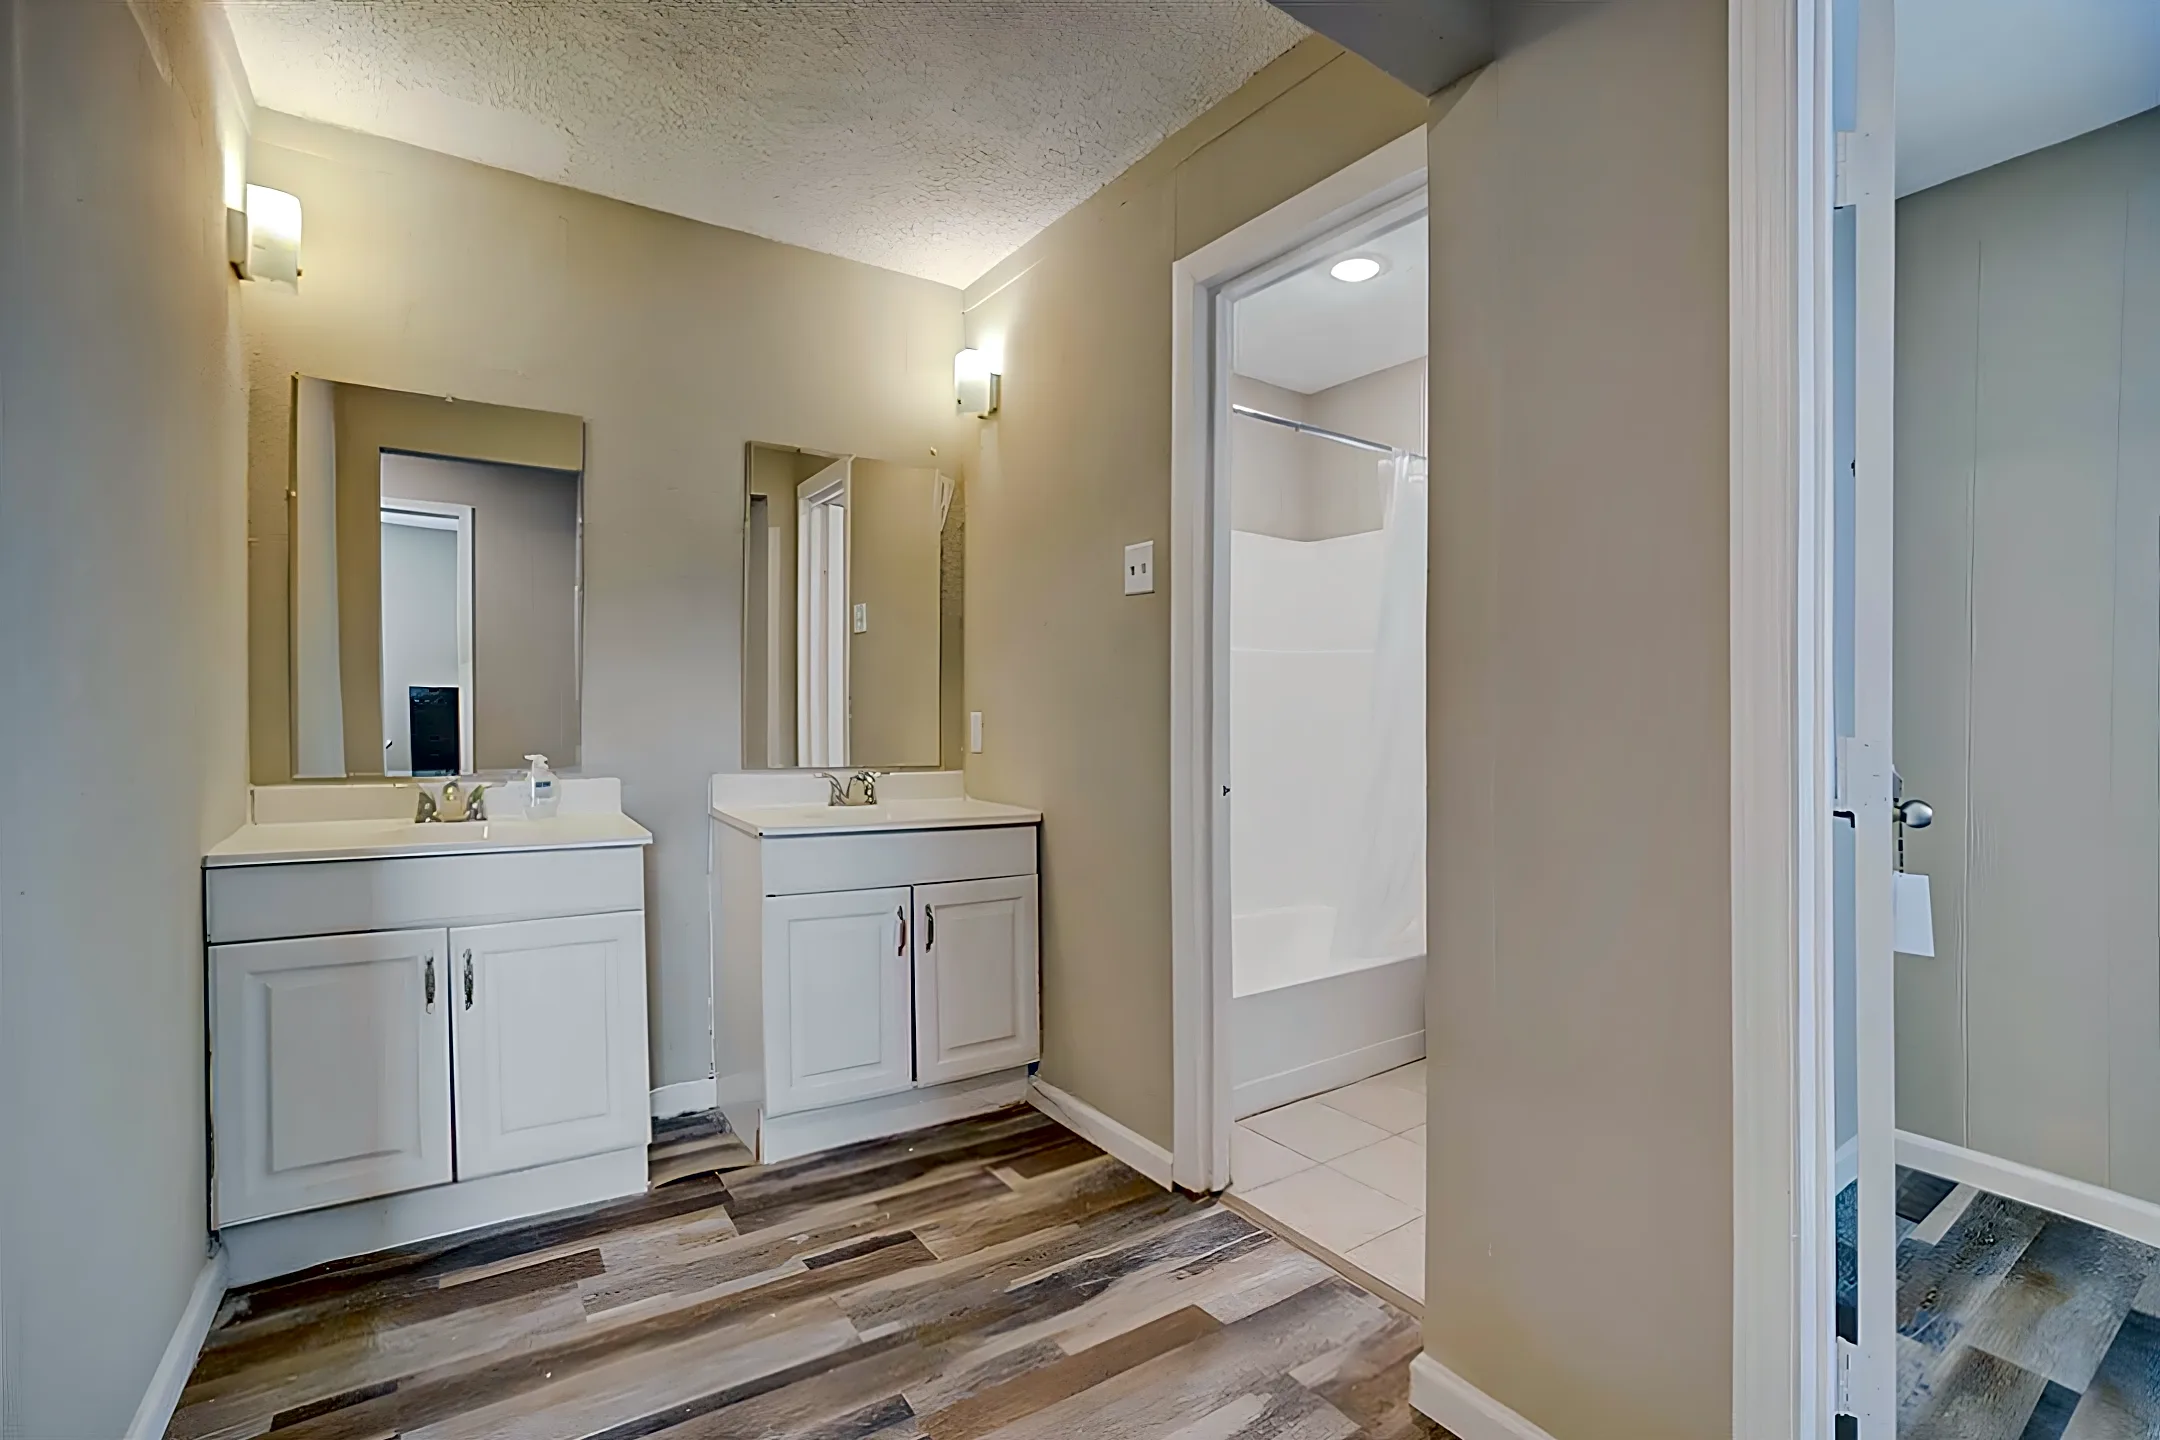 Bathroom - Room For Rent - Houston, TX